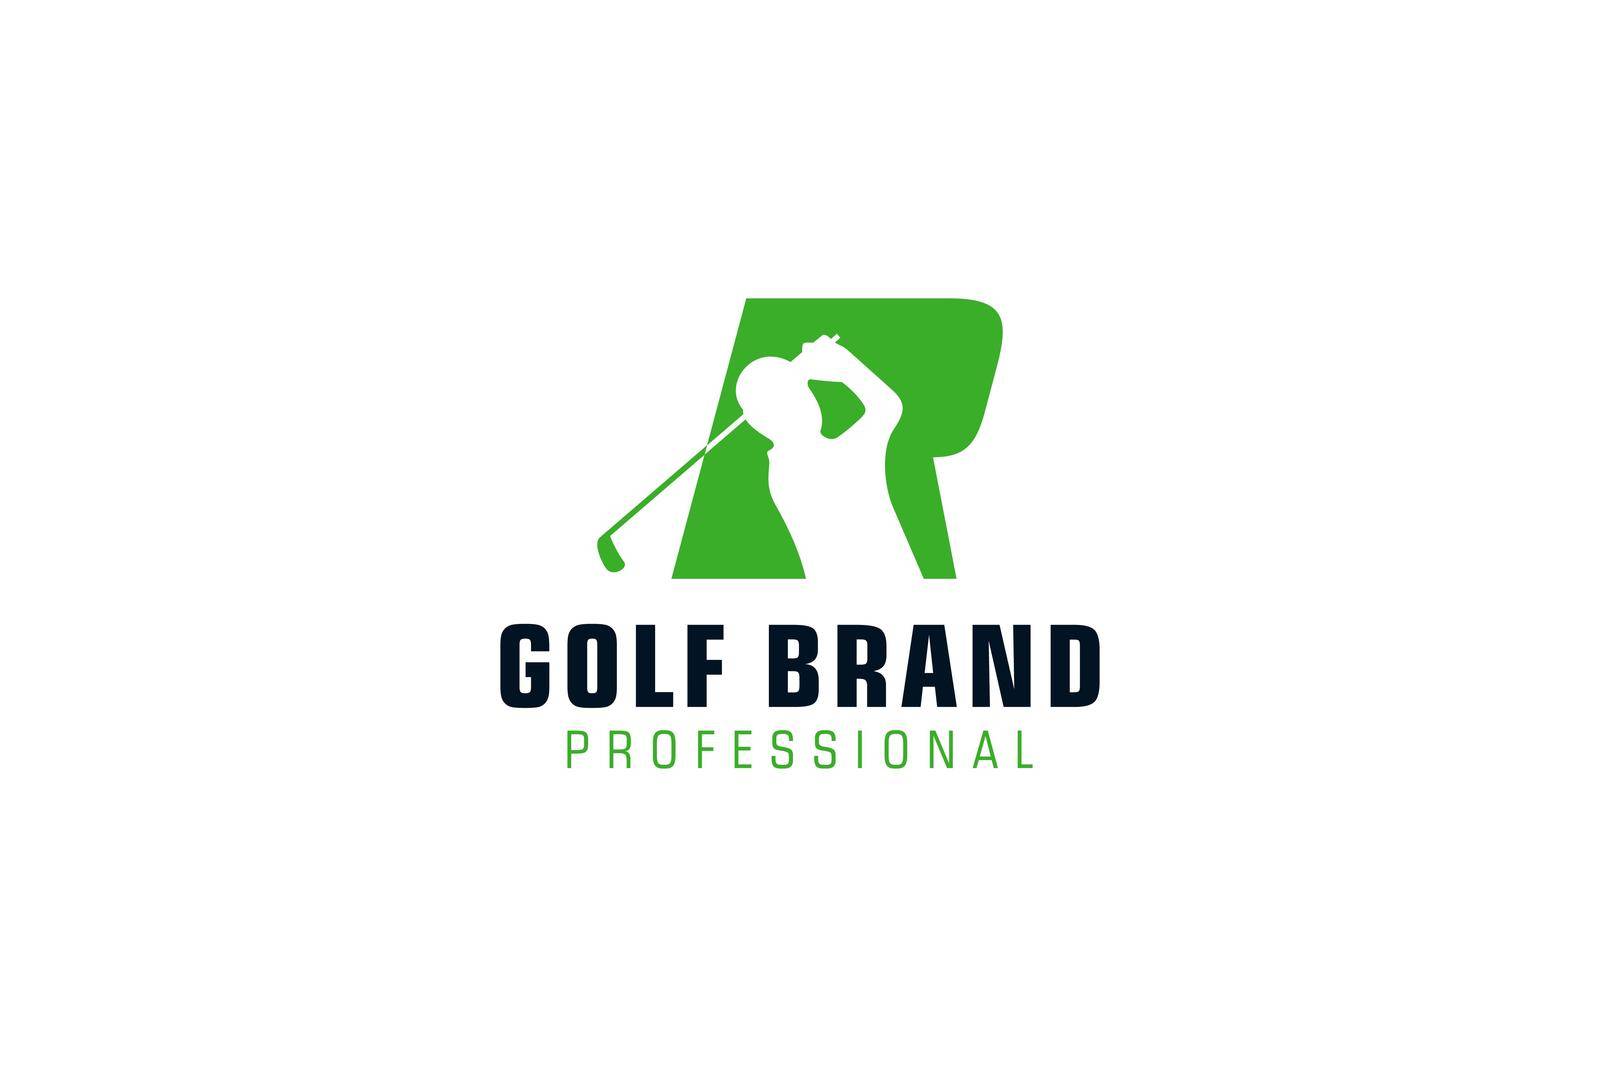 Letter R for Golf logo design vector template, Vector label of golf, Logo of golf championship, illustration, Creative icon, design concept by liaanniesatul